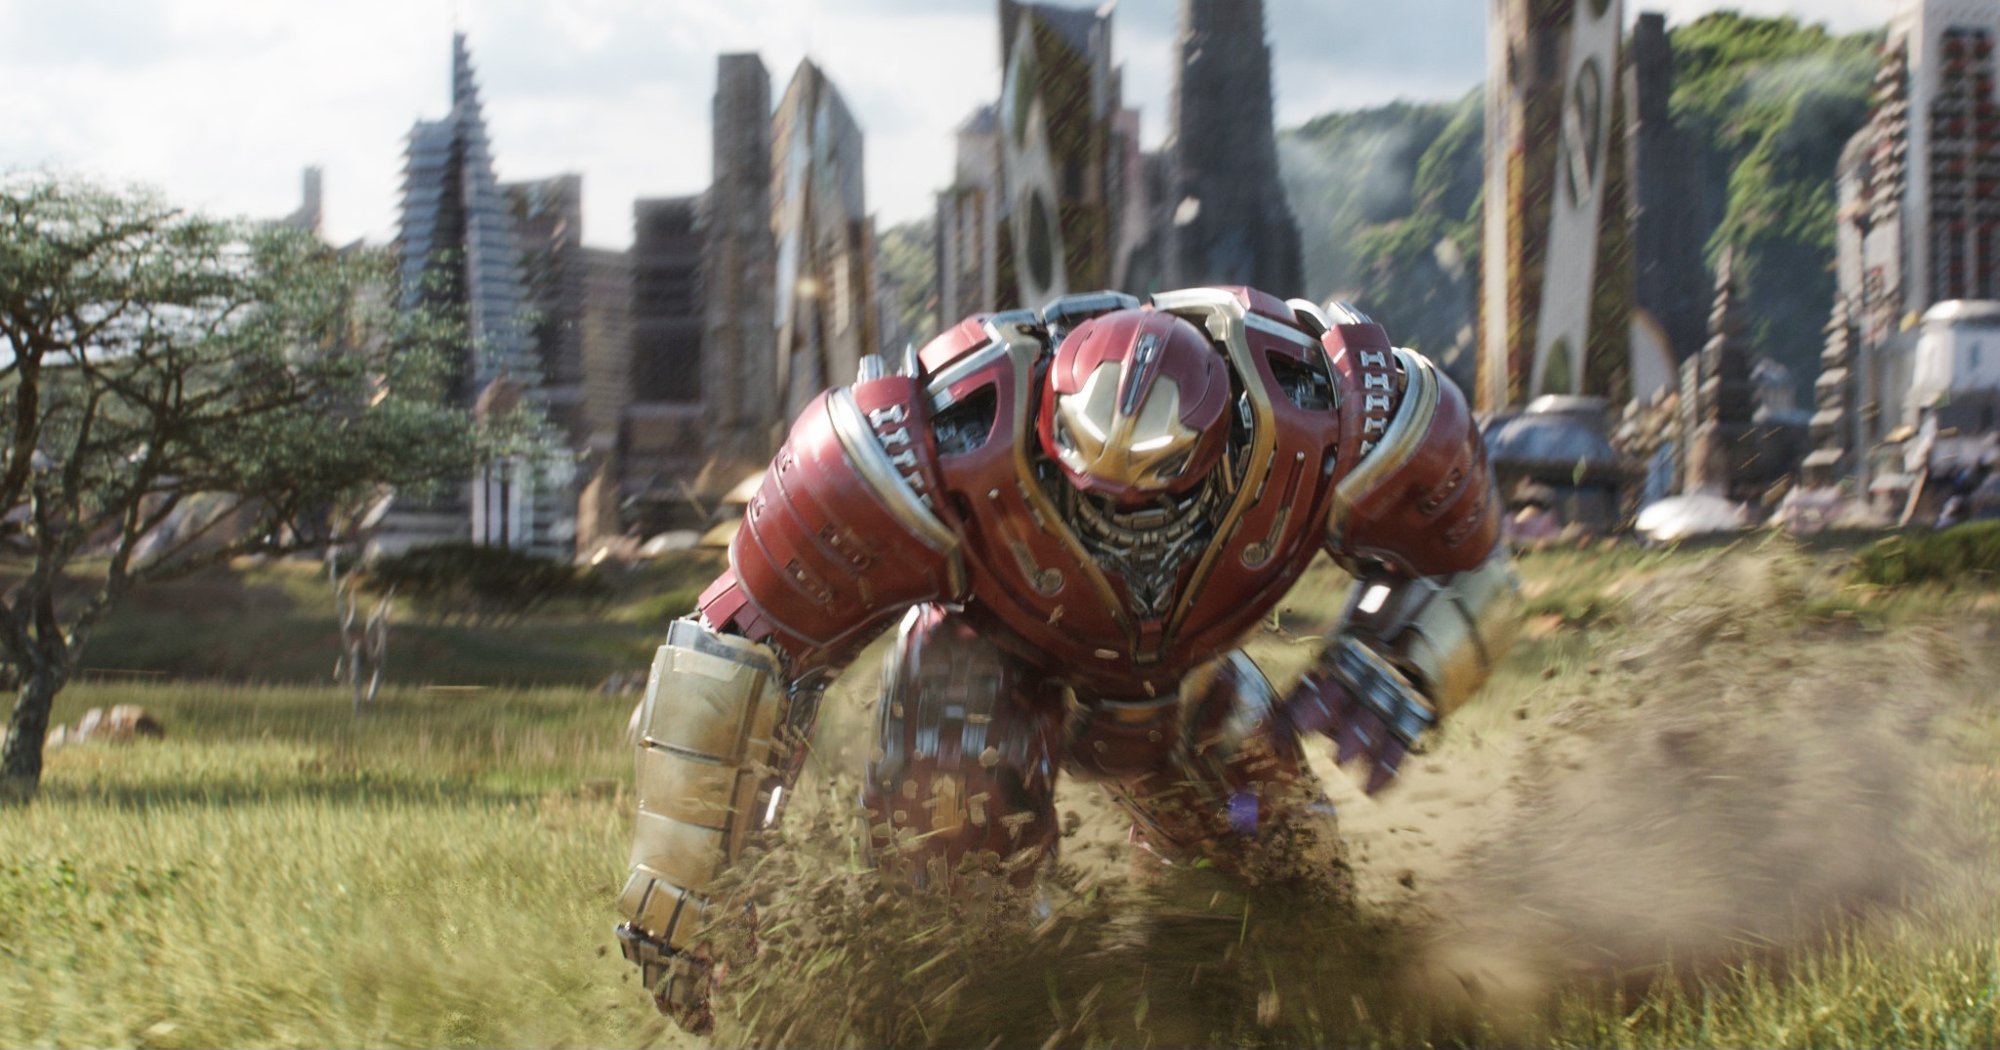 Iron Man from Marvel Studios' Avengers: Infinity War (2018)